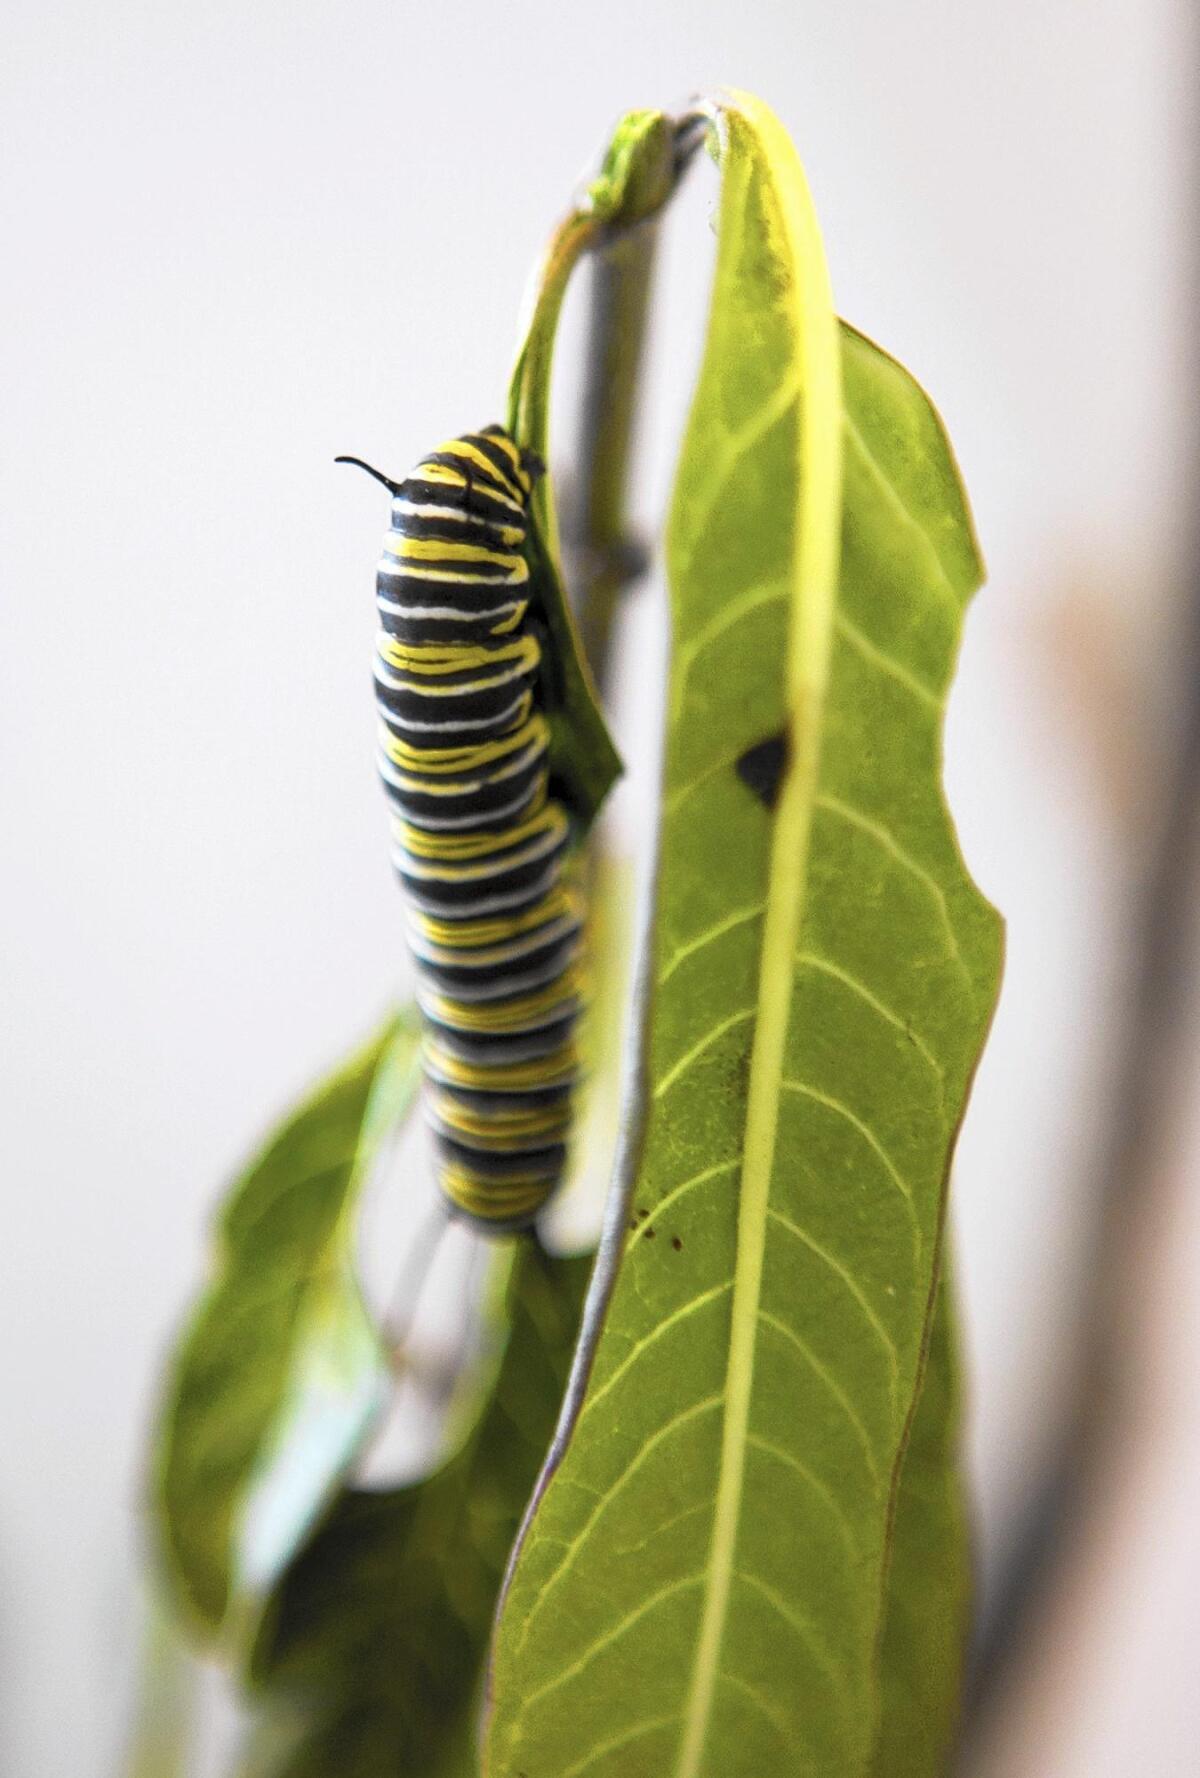 A monarch caterpillar eats eats milkweed at Leslie Gilson's home in Huntington Beach on Dec. 21.